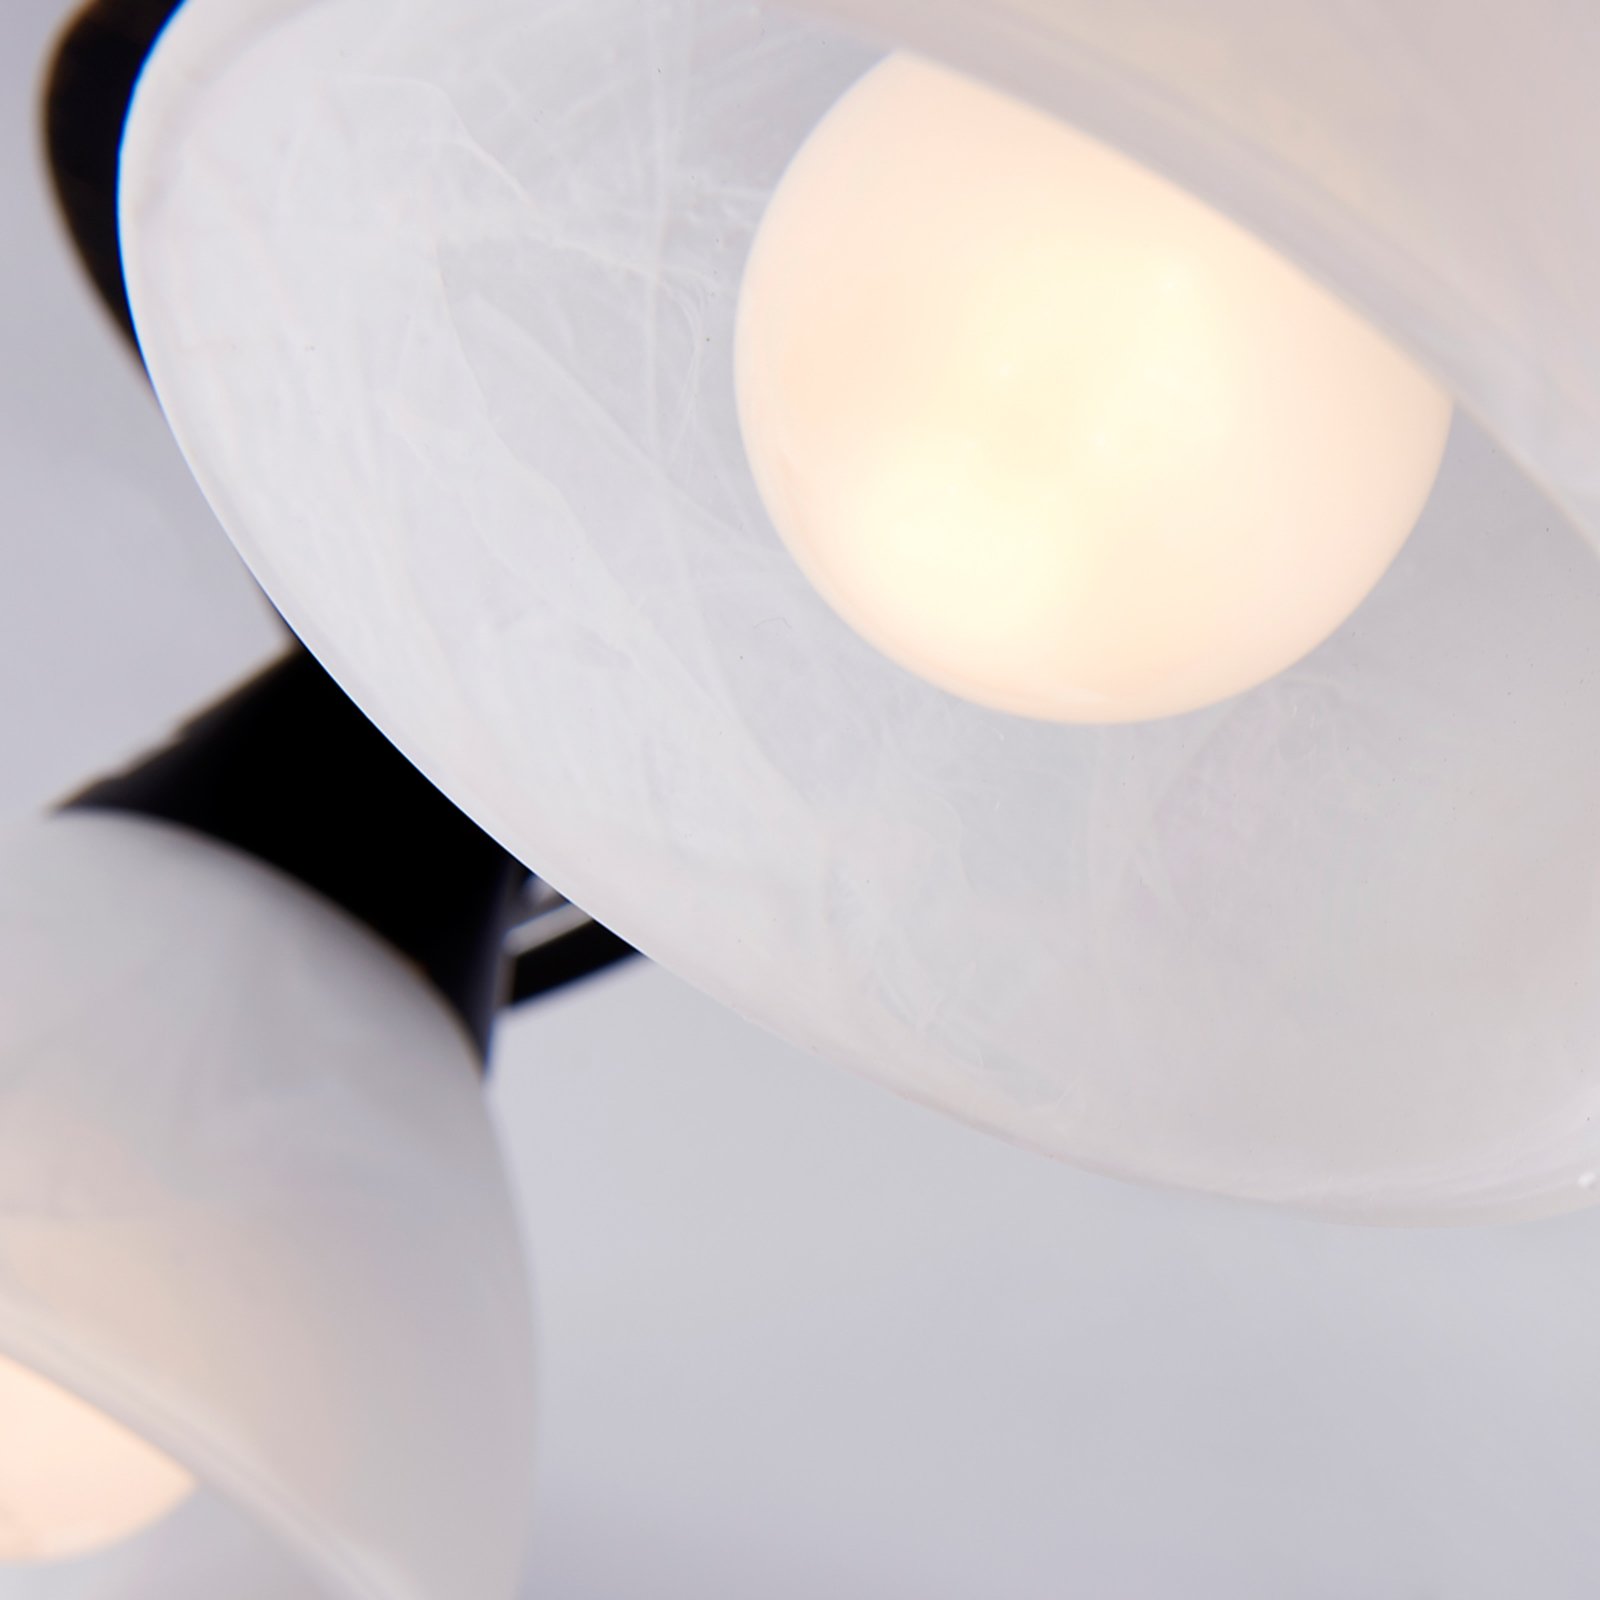 Lampa sufitowa LED Della, podłużna, 5-punktowa